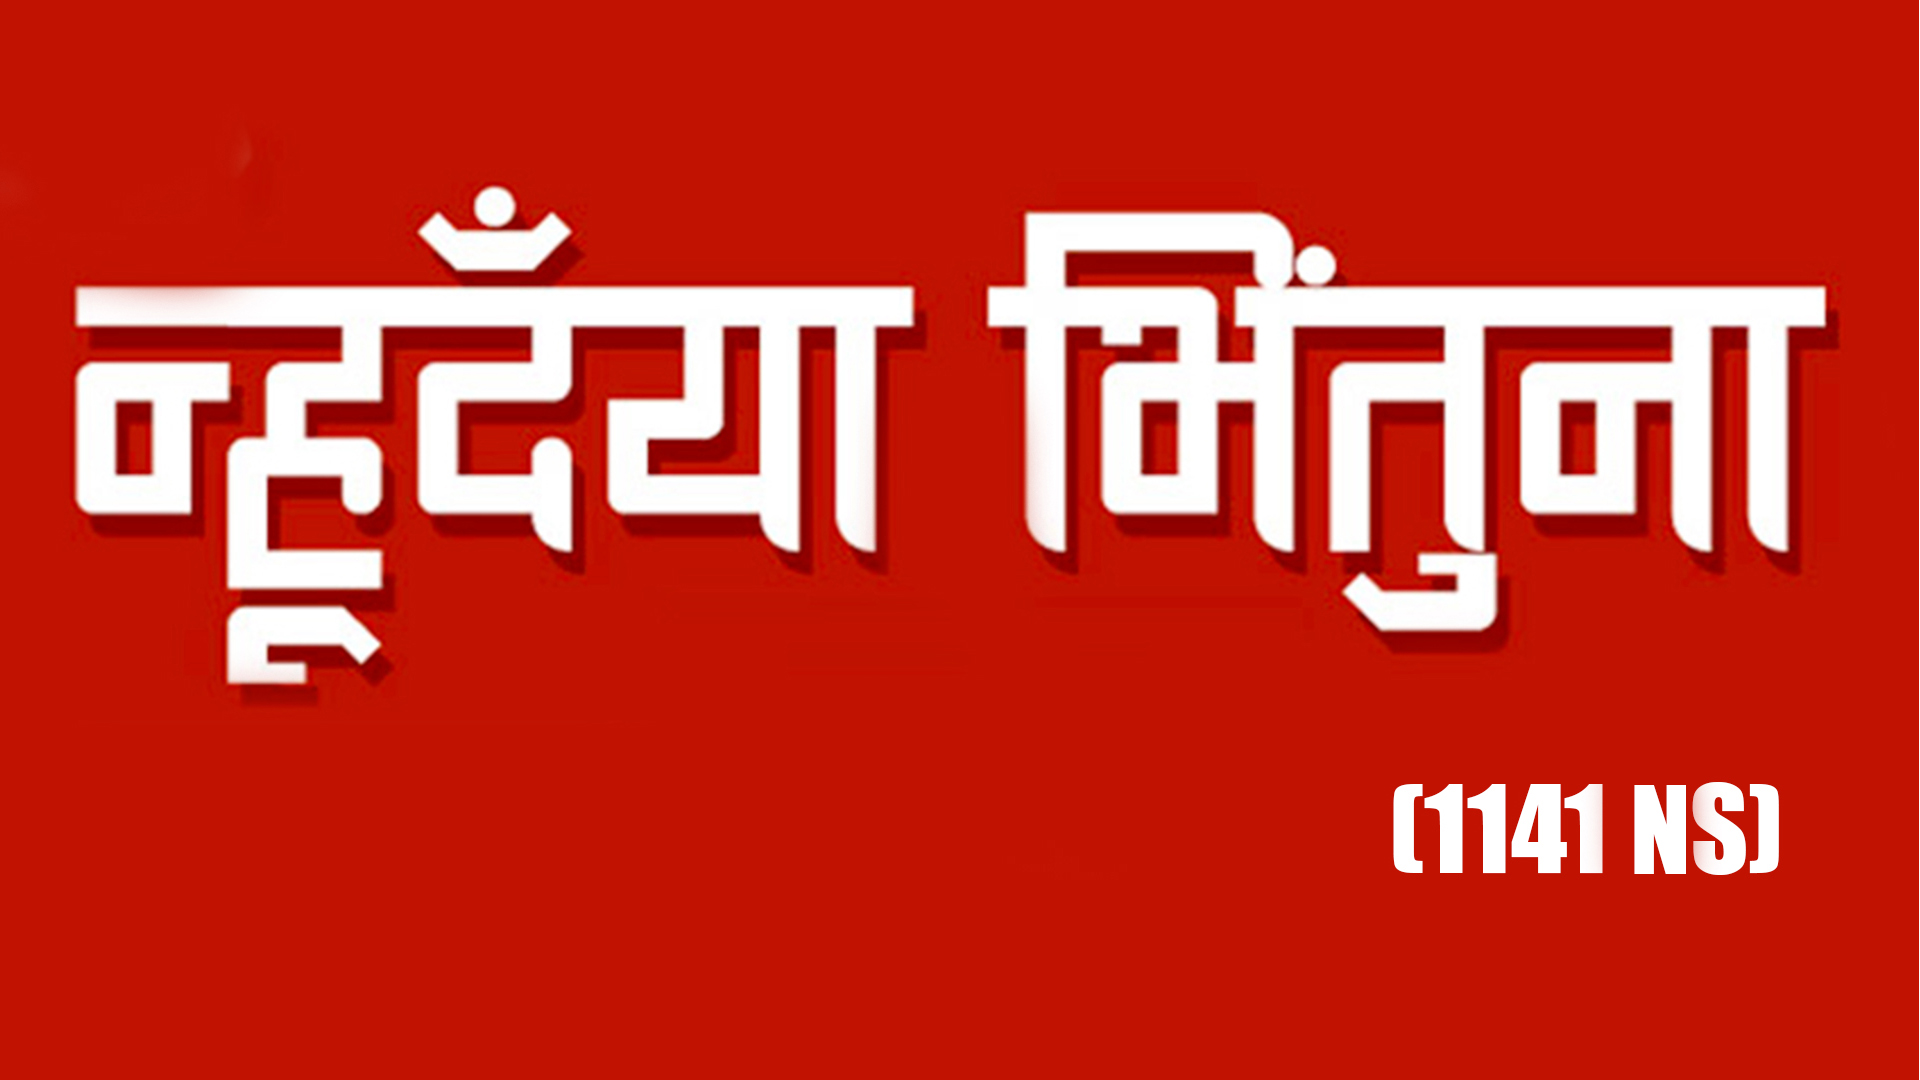 New Year Nepal Samvat 1141 starts from Monday